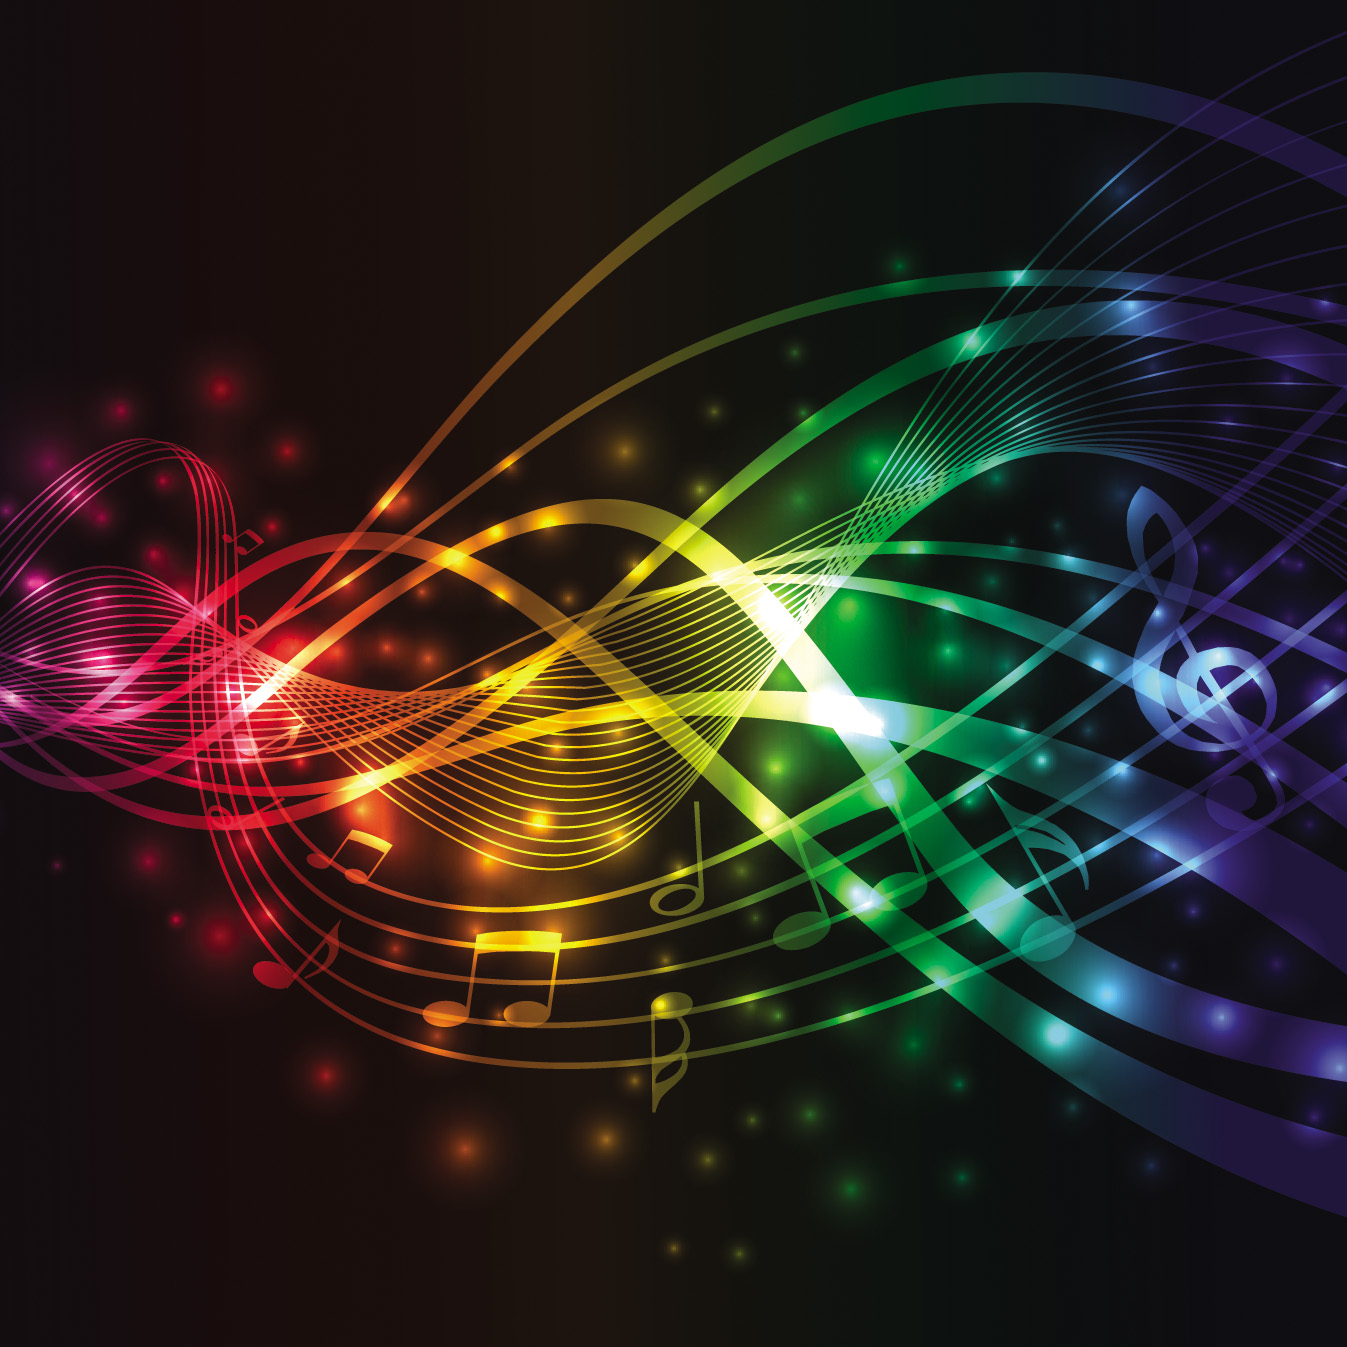 Music Wave Backgrounds Vector » Векторные клипарты, текстурные фоны